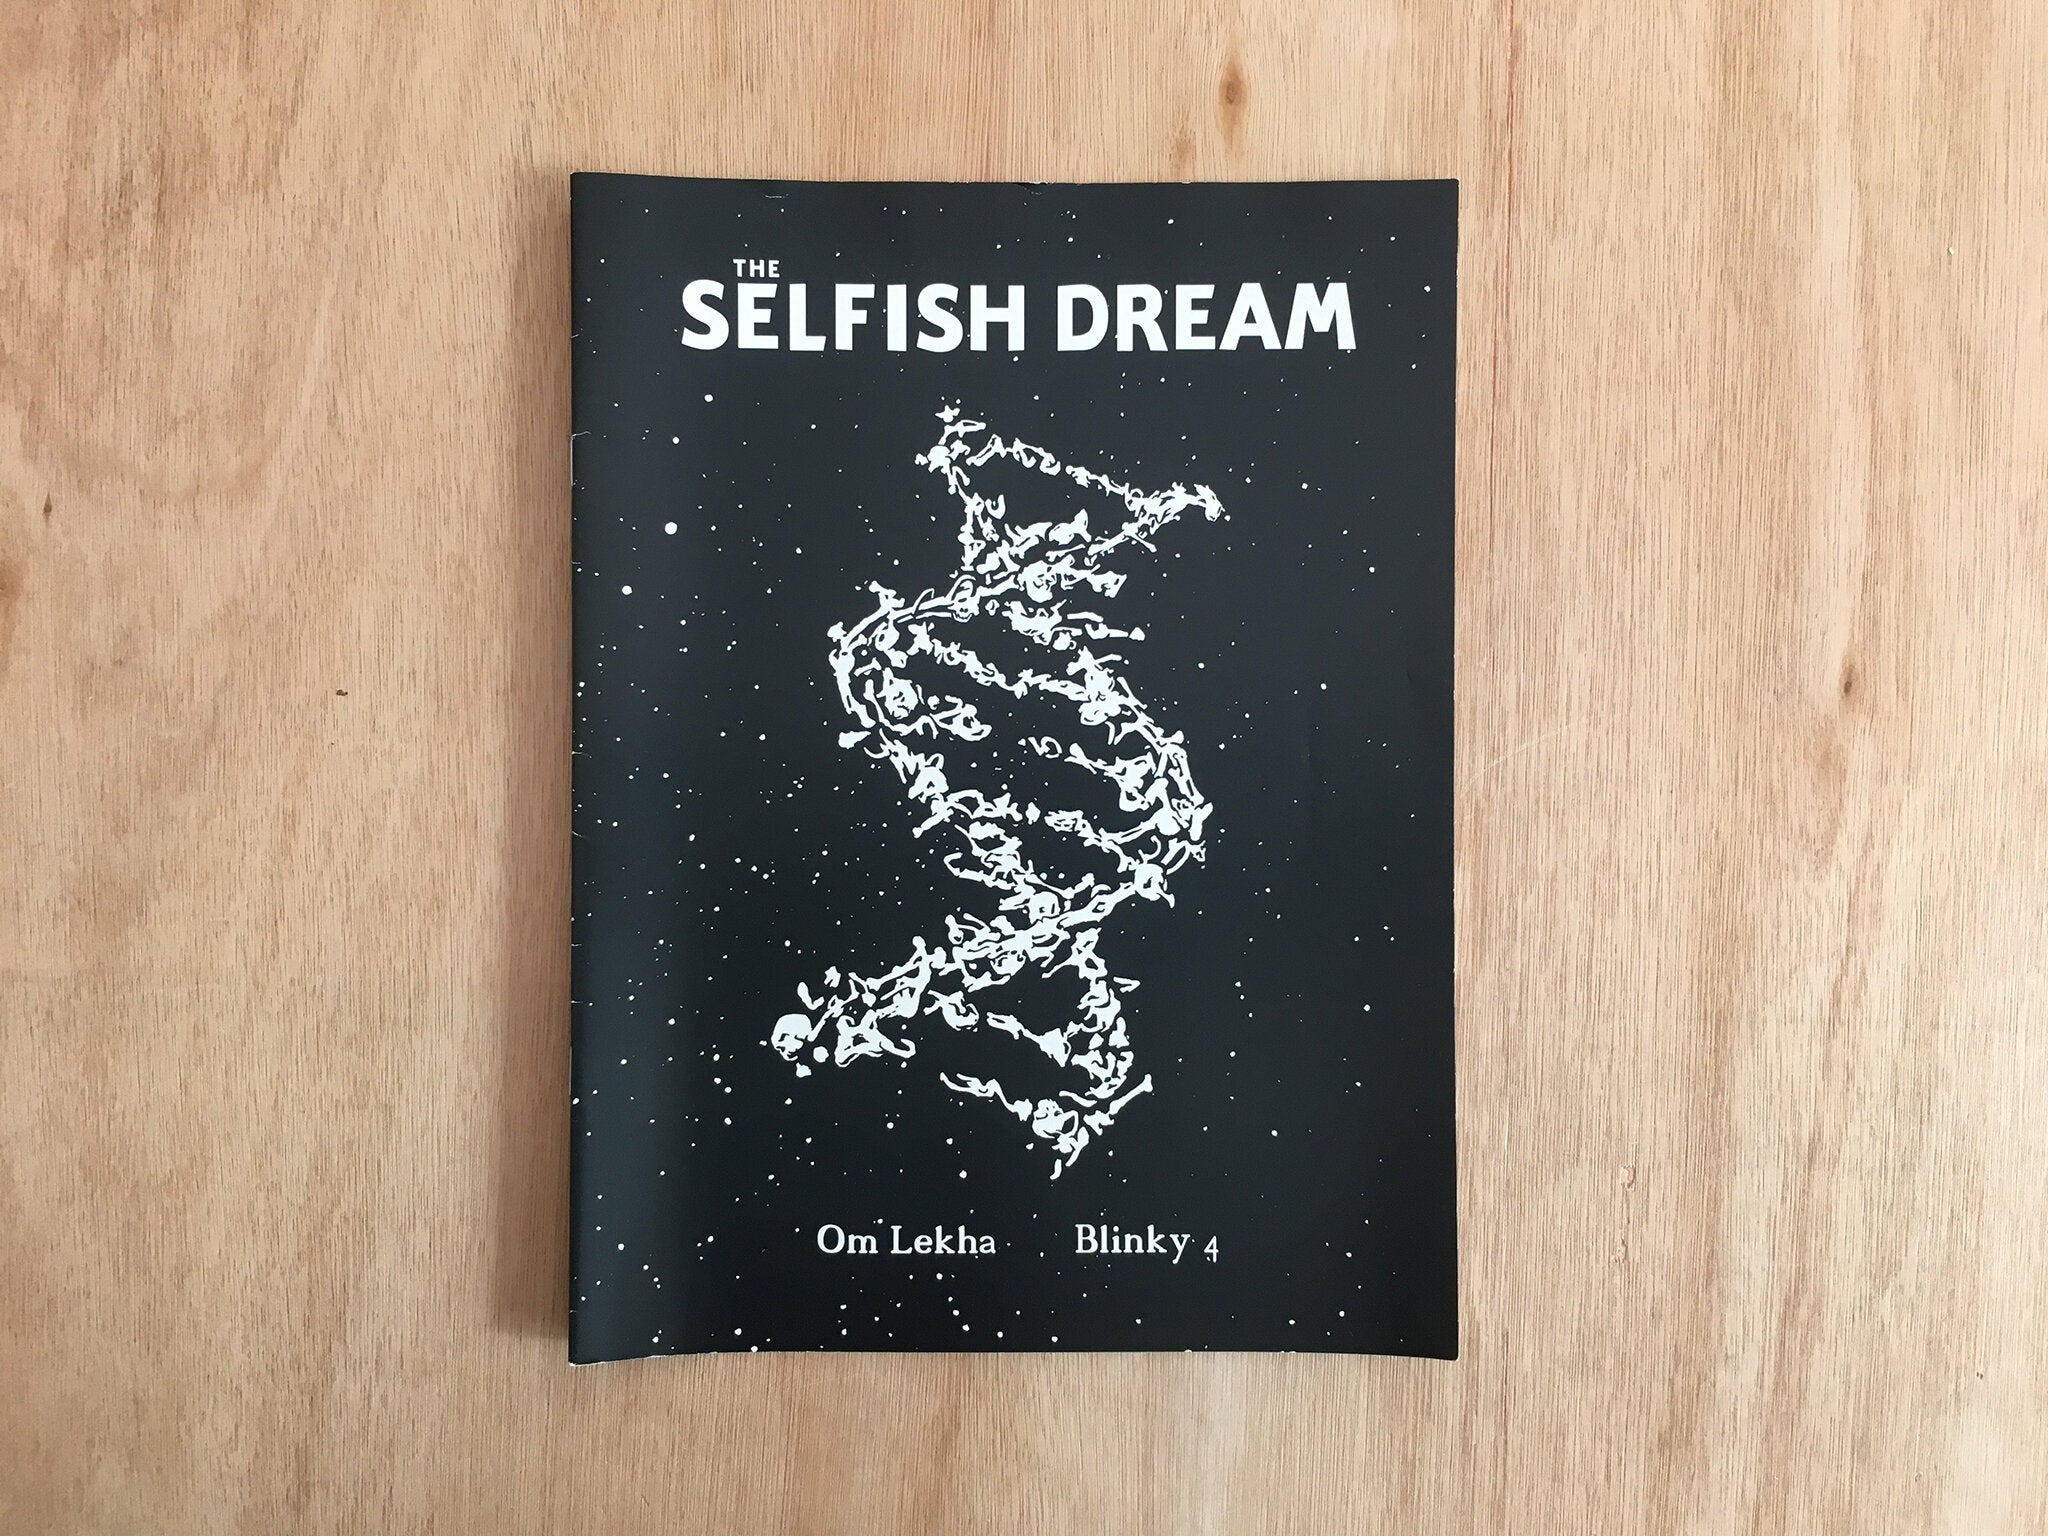 THE SELFISH DREAM by Om Lekha & Blinky 4